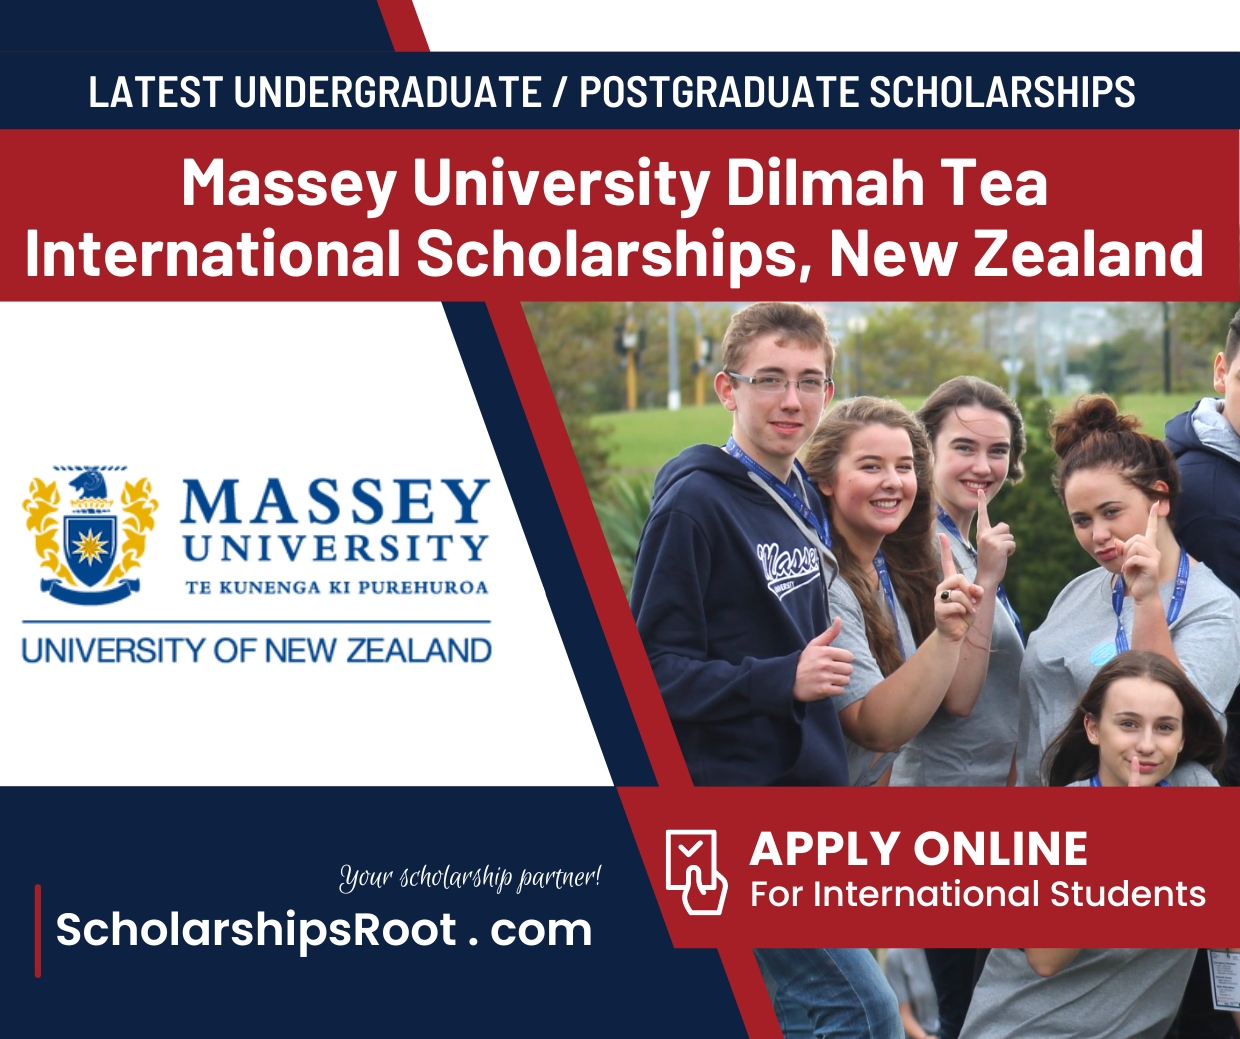 Massey University Dilmah Tea International Scholarships New Zealand